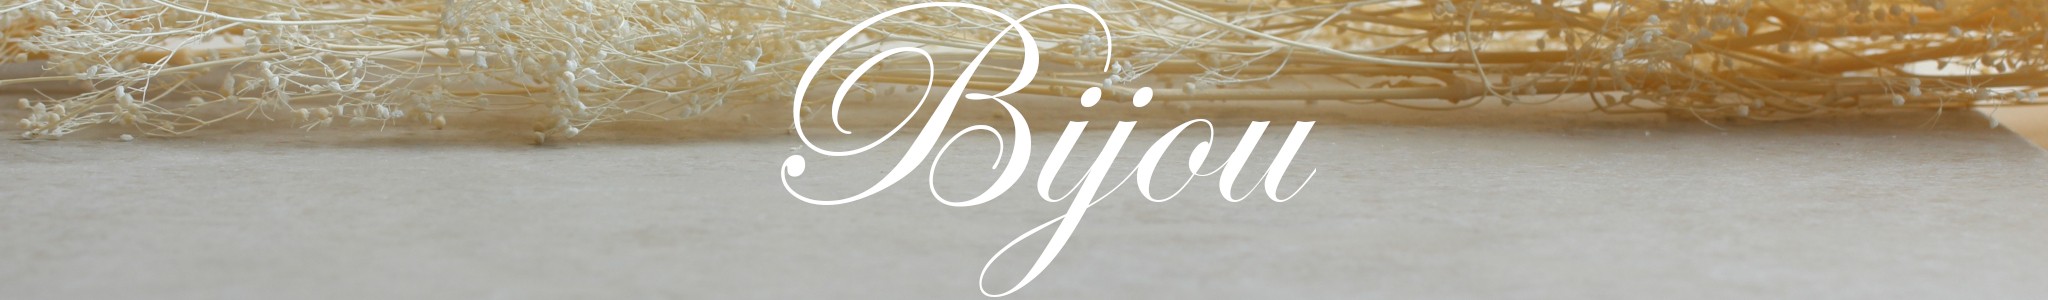 Bijou Product Line Image